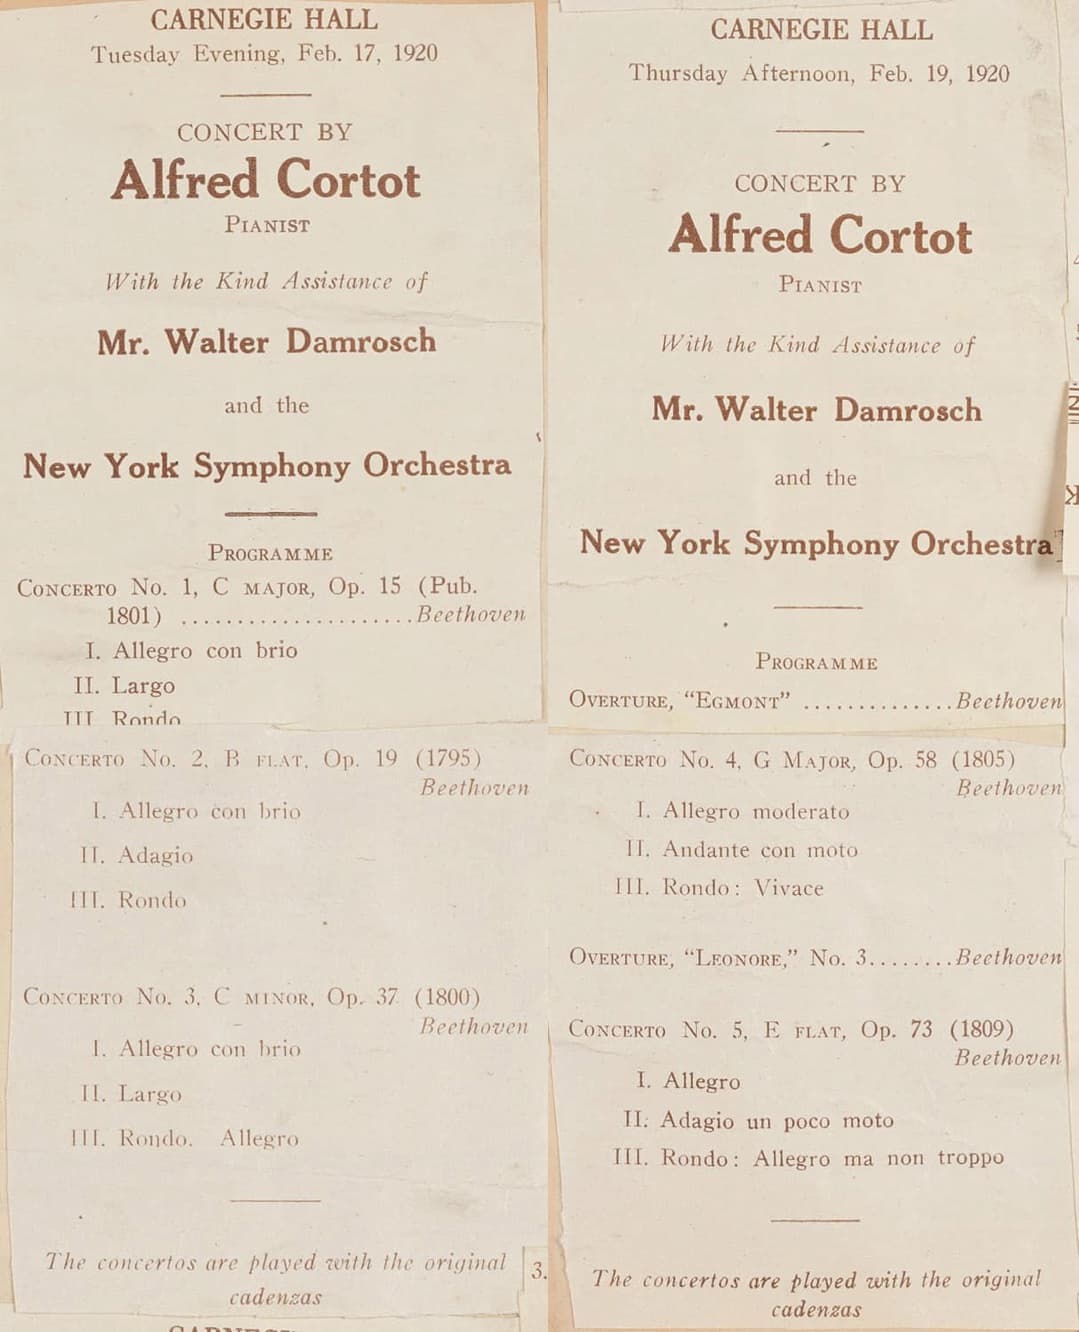 Alfred Cortot's recital program in NYC